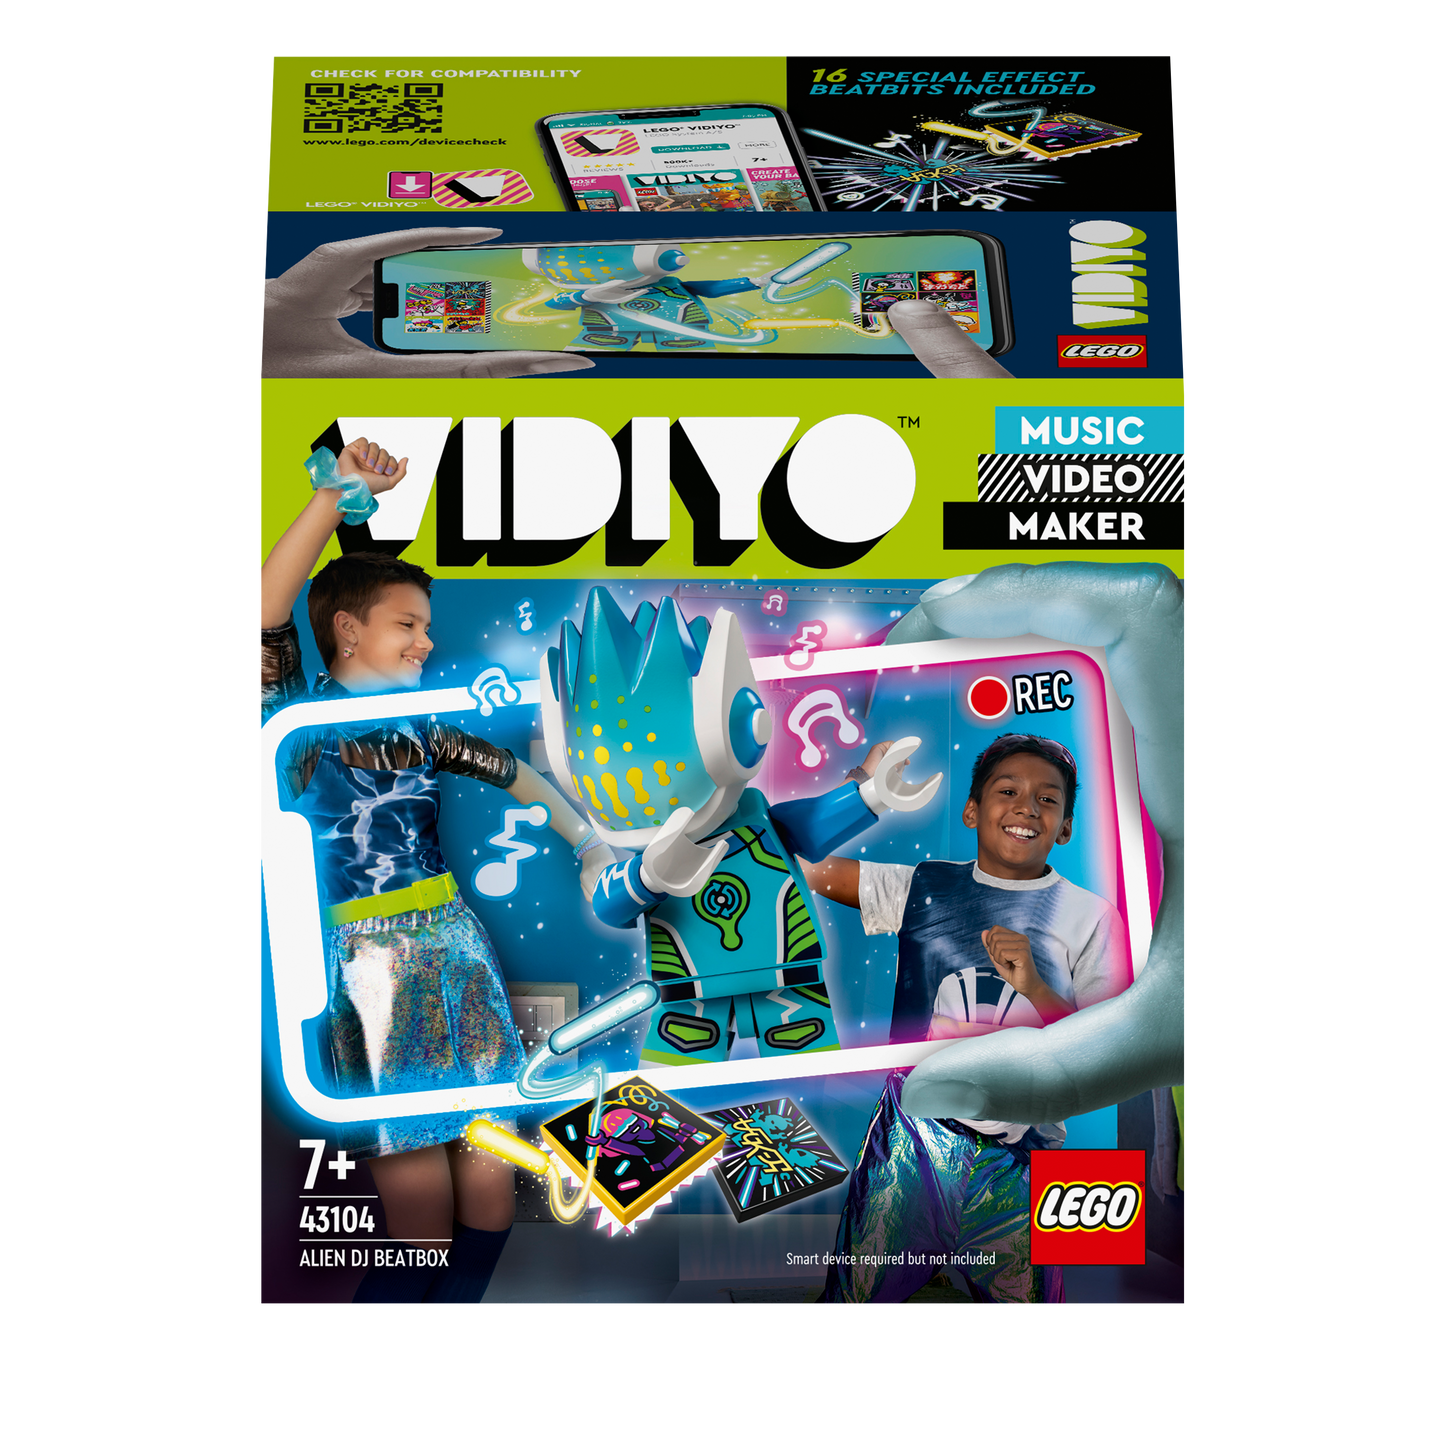 43104 LEGO Vidiyo - Alien DJ BeatBox